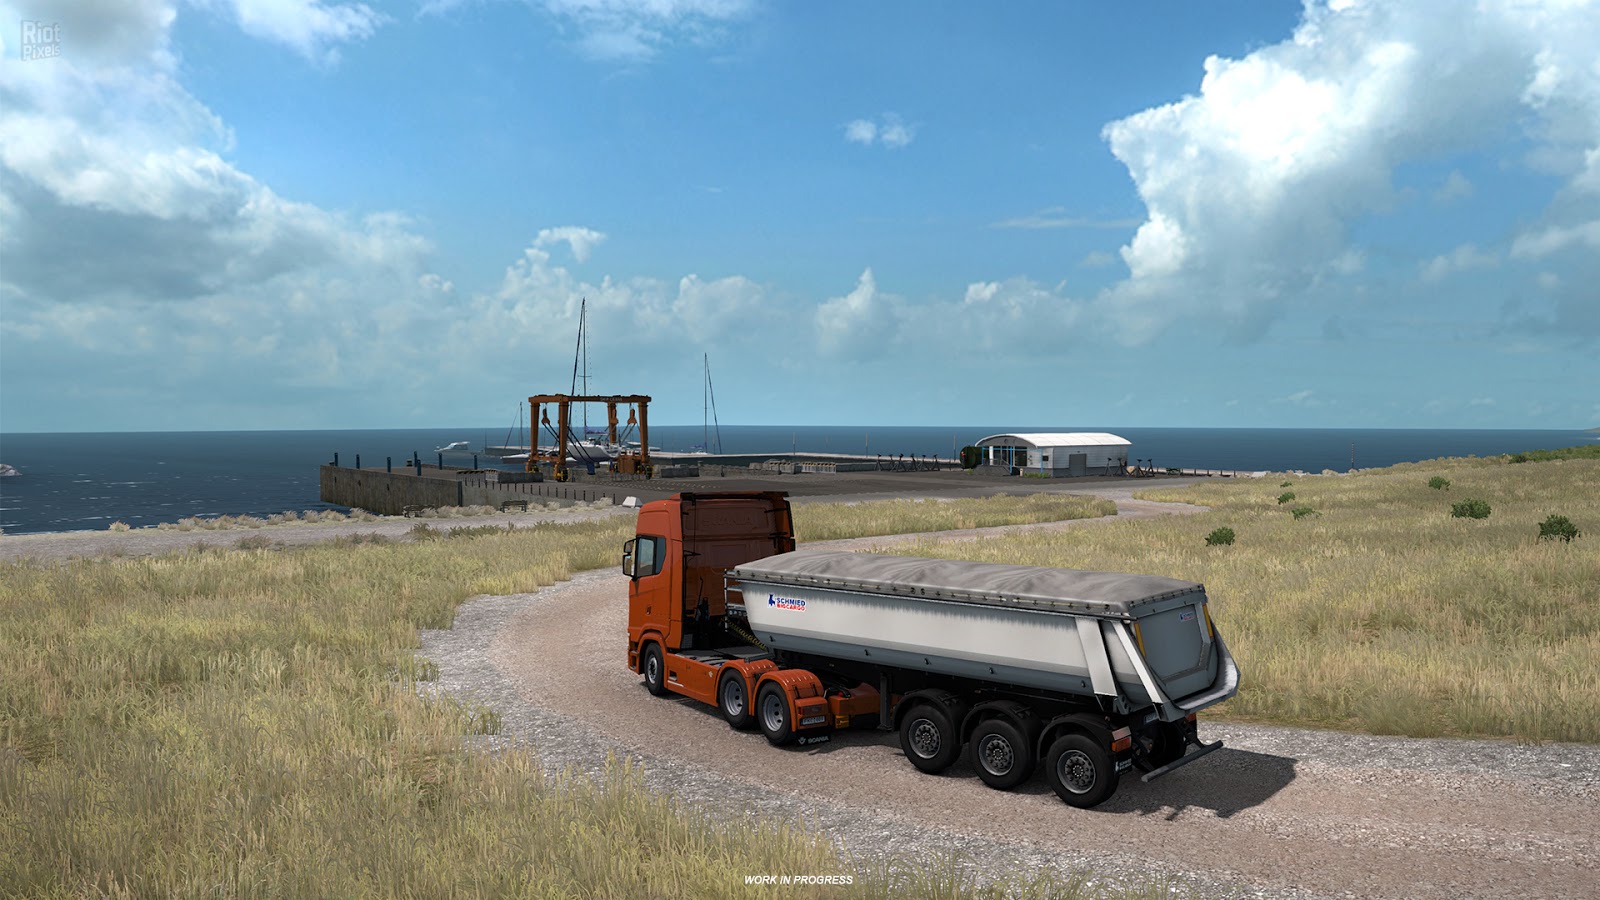 euro truck simulator 3 download torent kickass